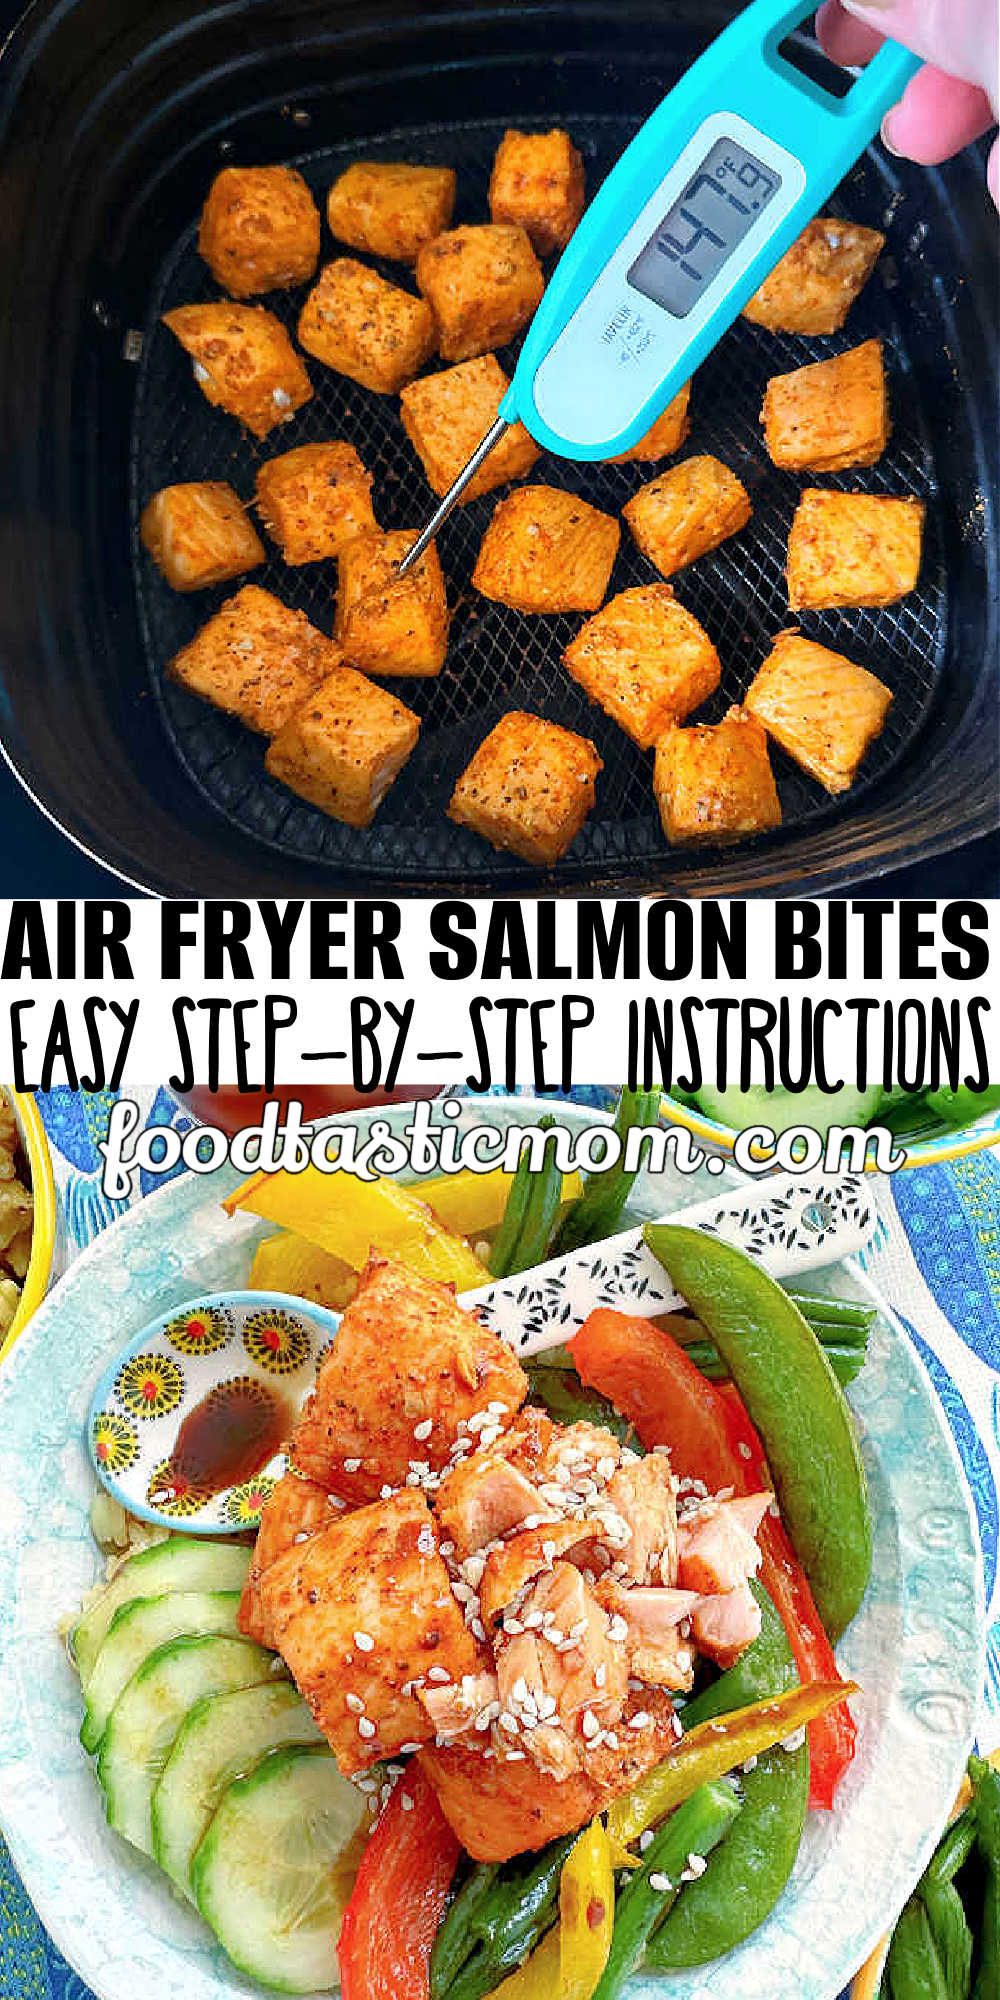 Air Fryer Salmon Bites | Foodtastic Mom #airfryersalmonbites #salmonrecipes #airfryerrecipes via @foodtasticmom